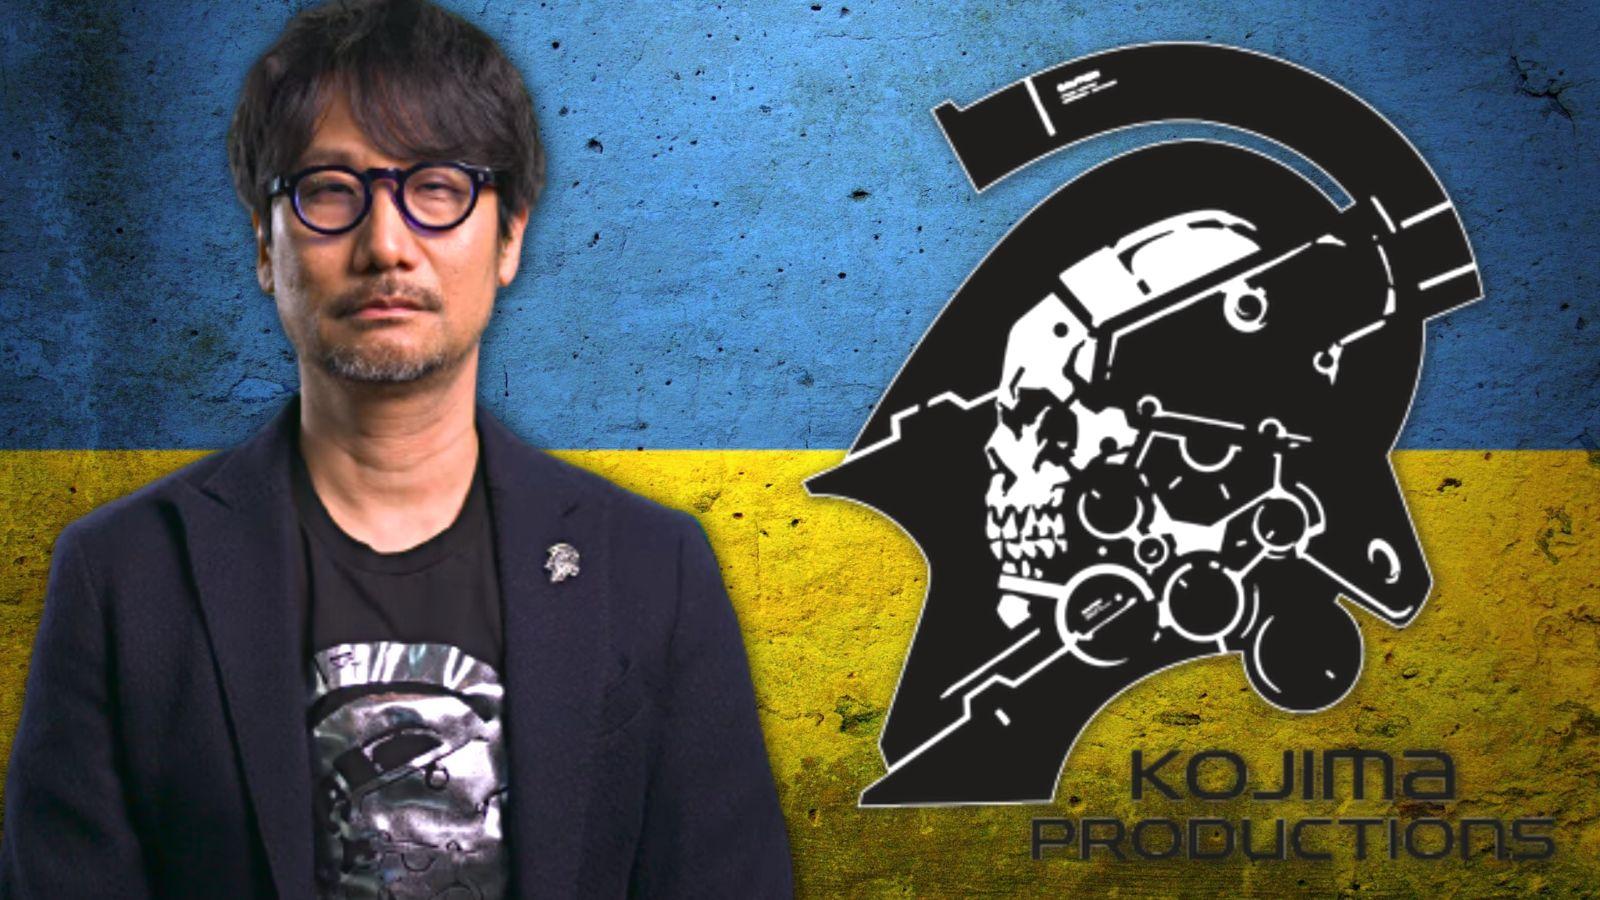 Hideo Kojima's game company sells merch to support Ukrainian refugees -  Dexerto